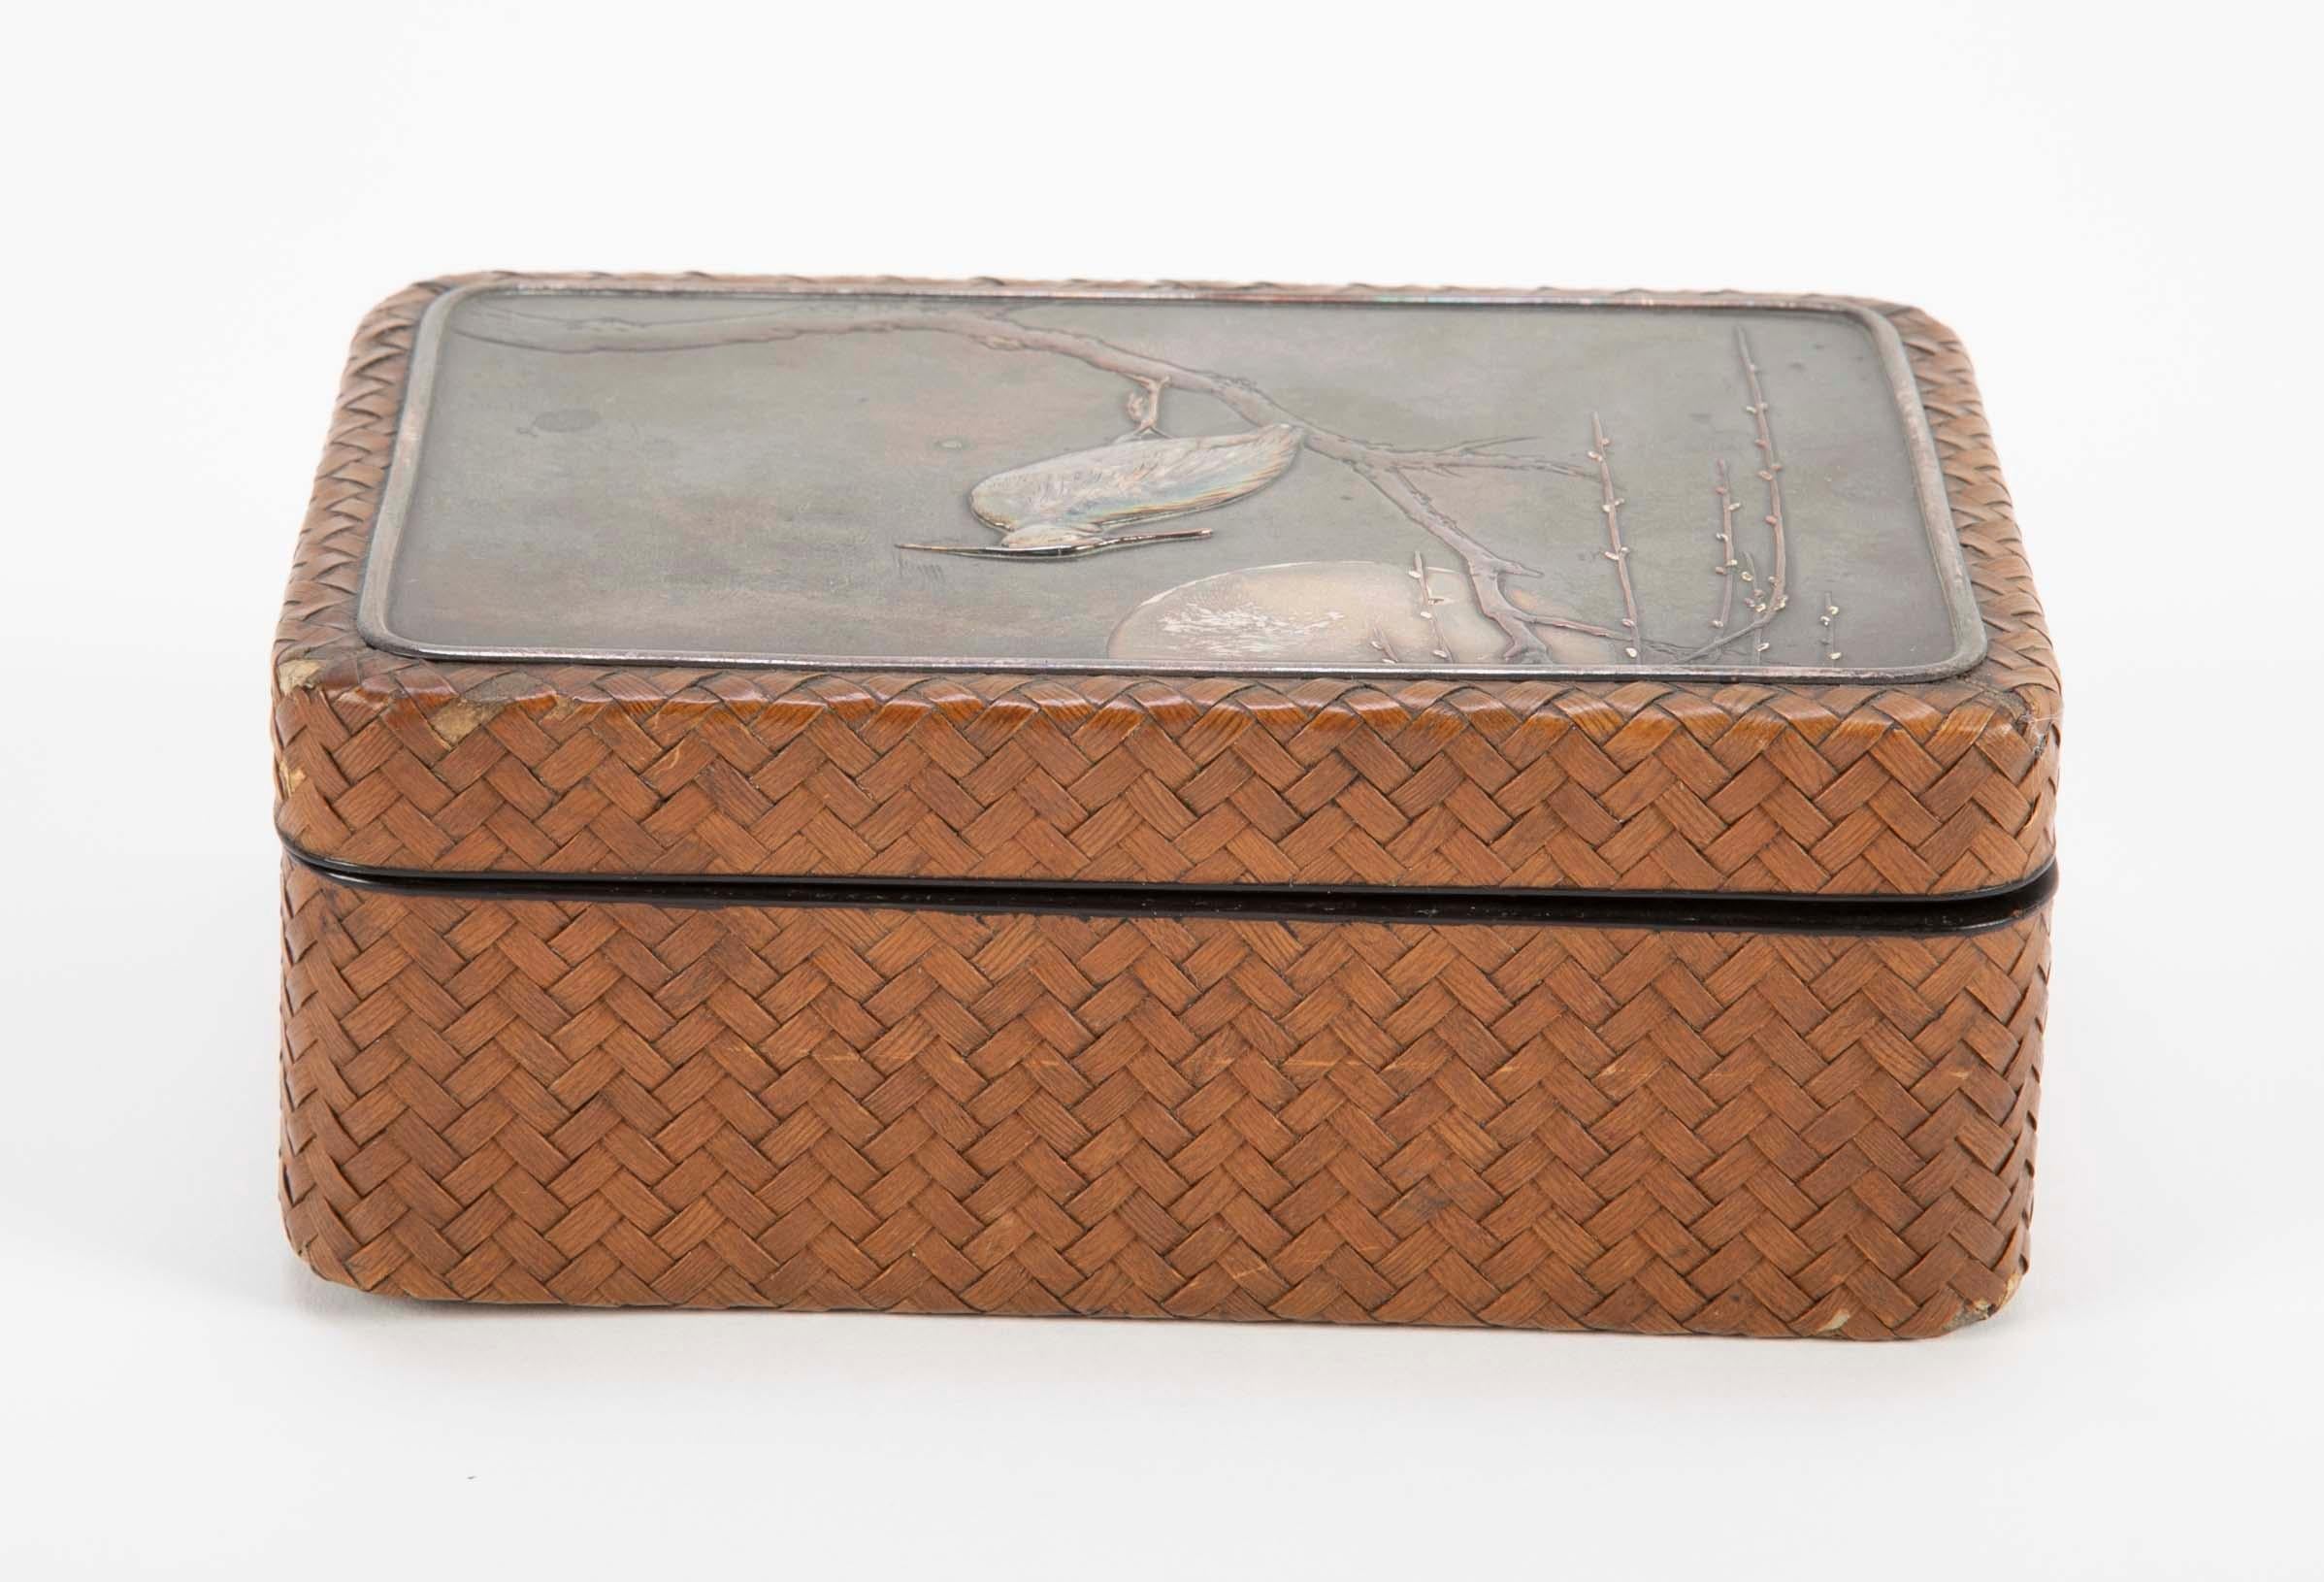 Japanese Meiji Period Box of Woven Cane, Lacquer, Silver & Copper 2